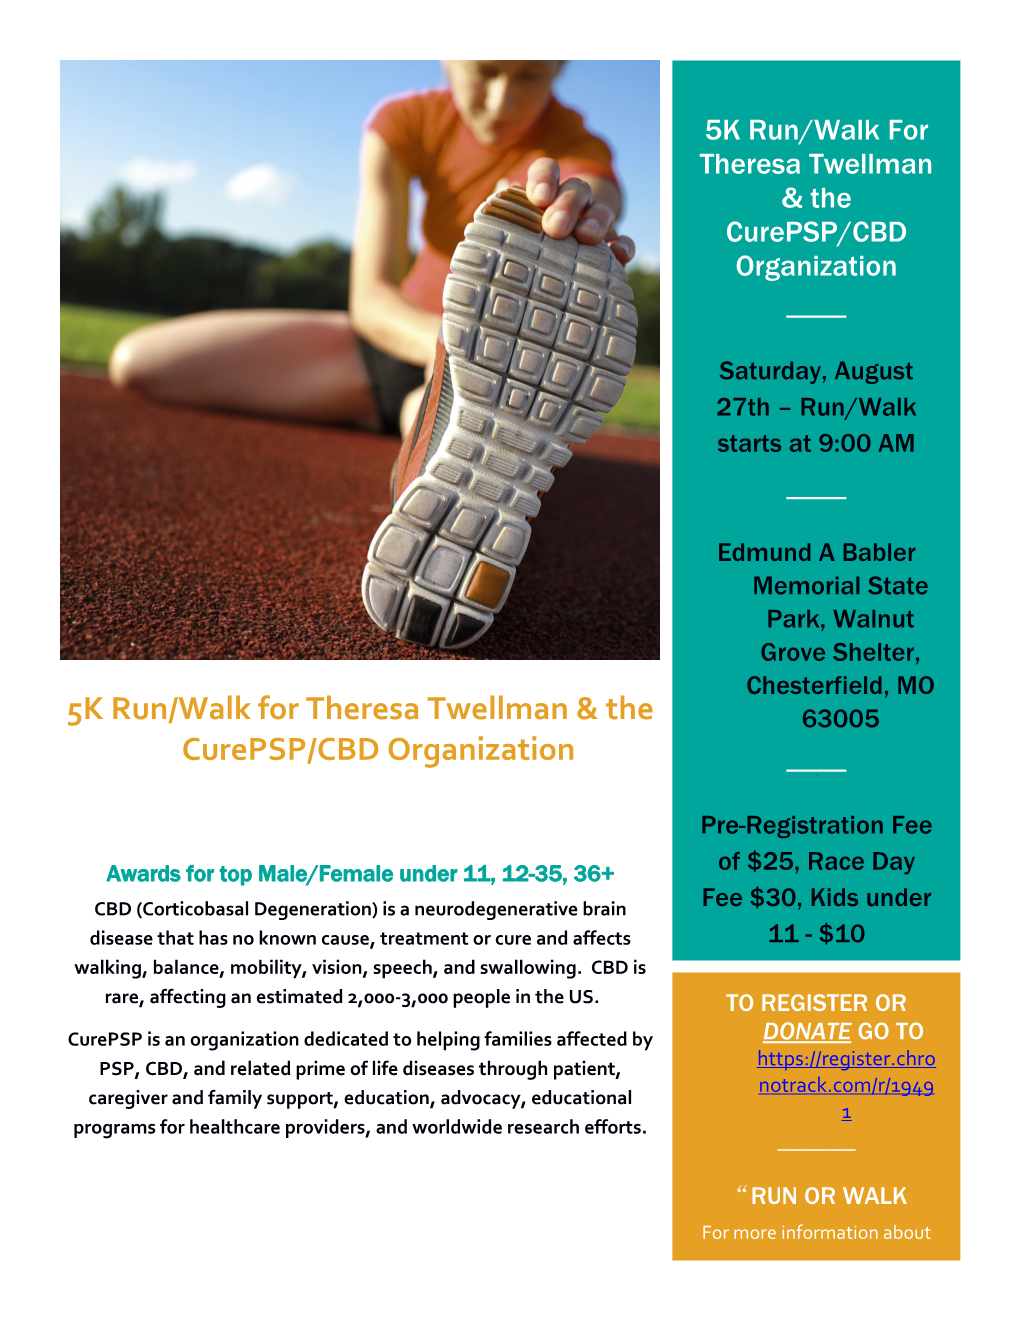 5K Run/Walk for Theresa Twellman & the Curepsp/CBD Organization